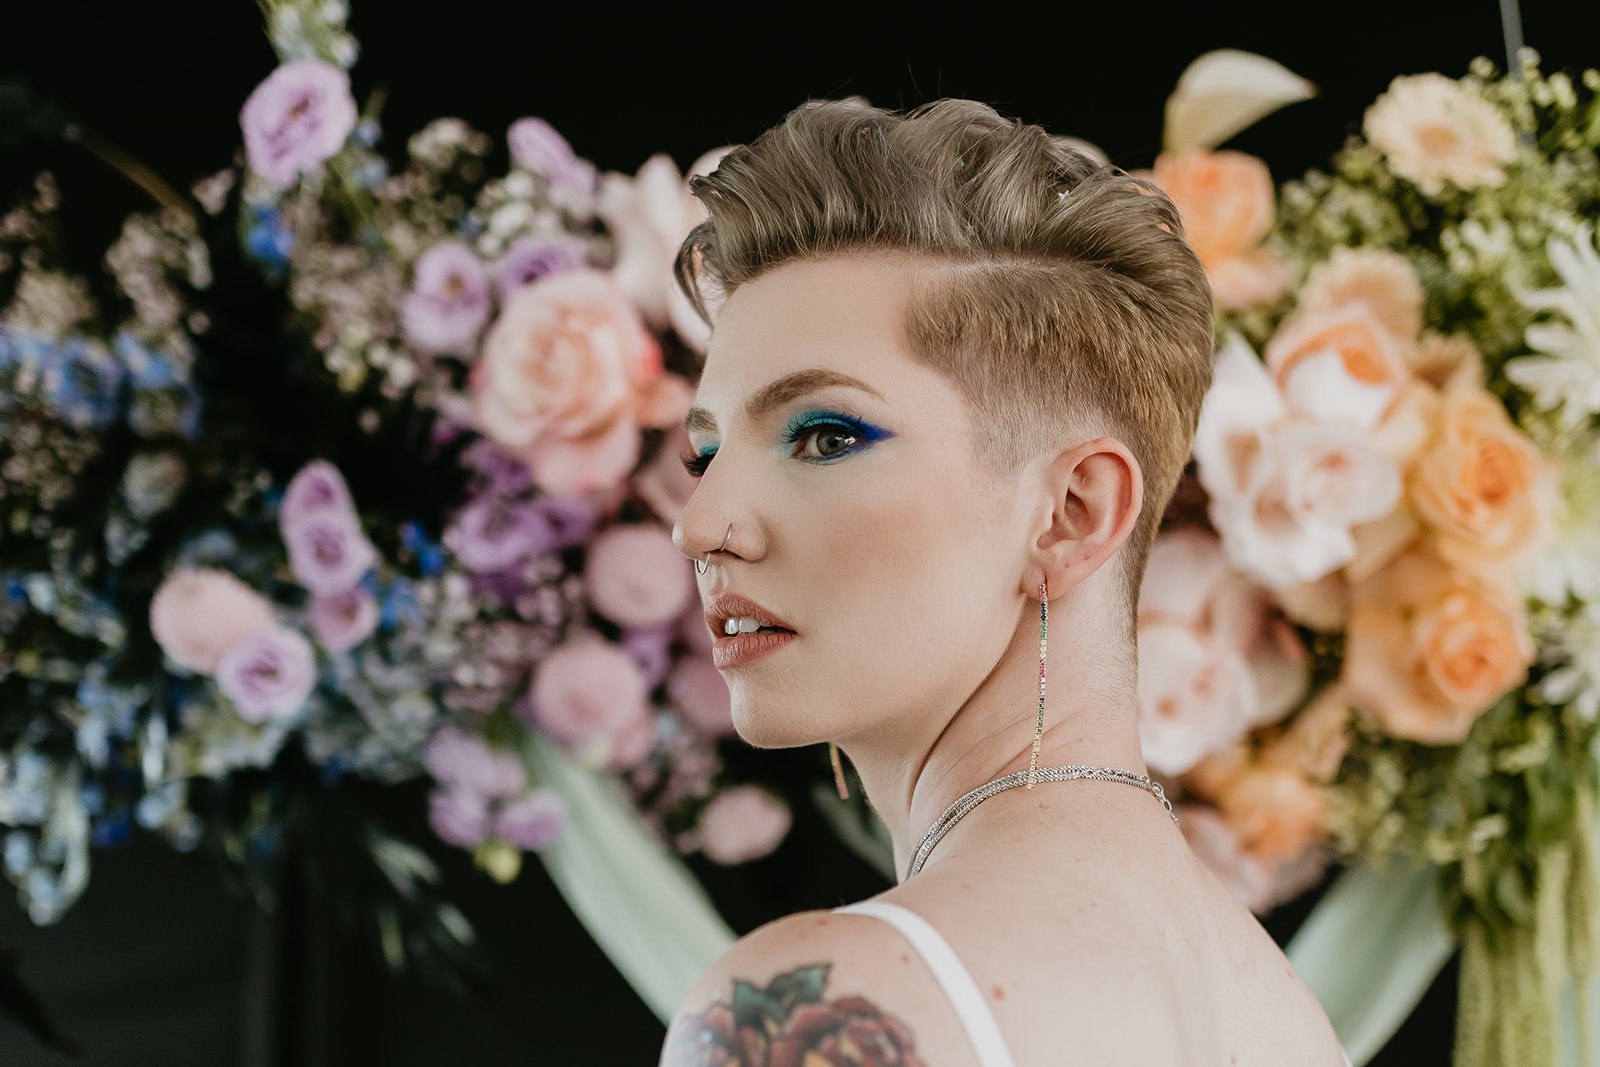 Bold blue eyeshadow on this rocker chic bride